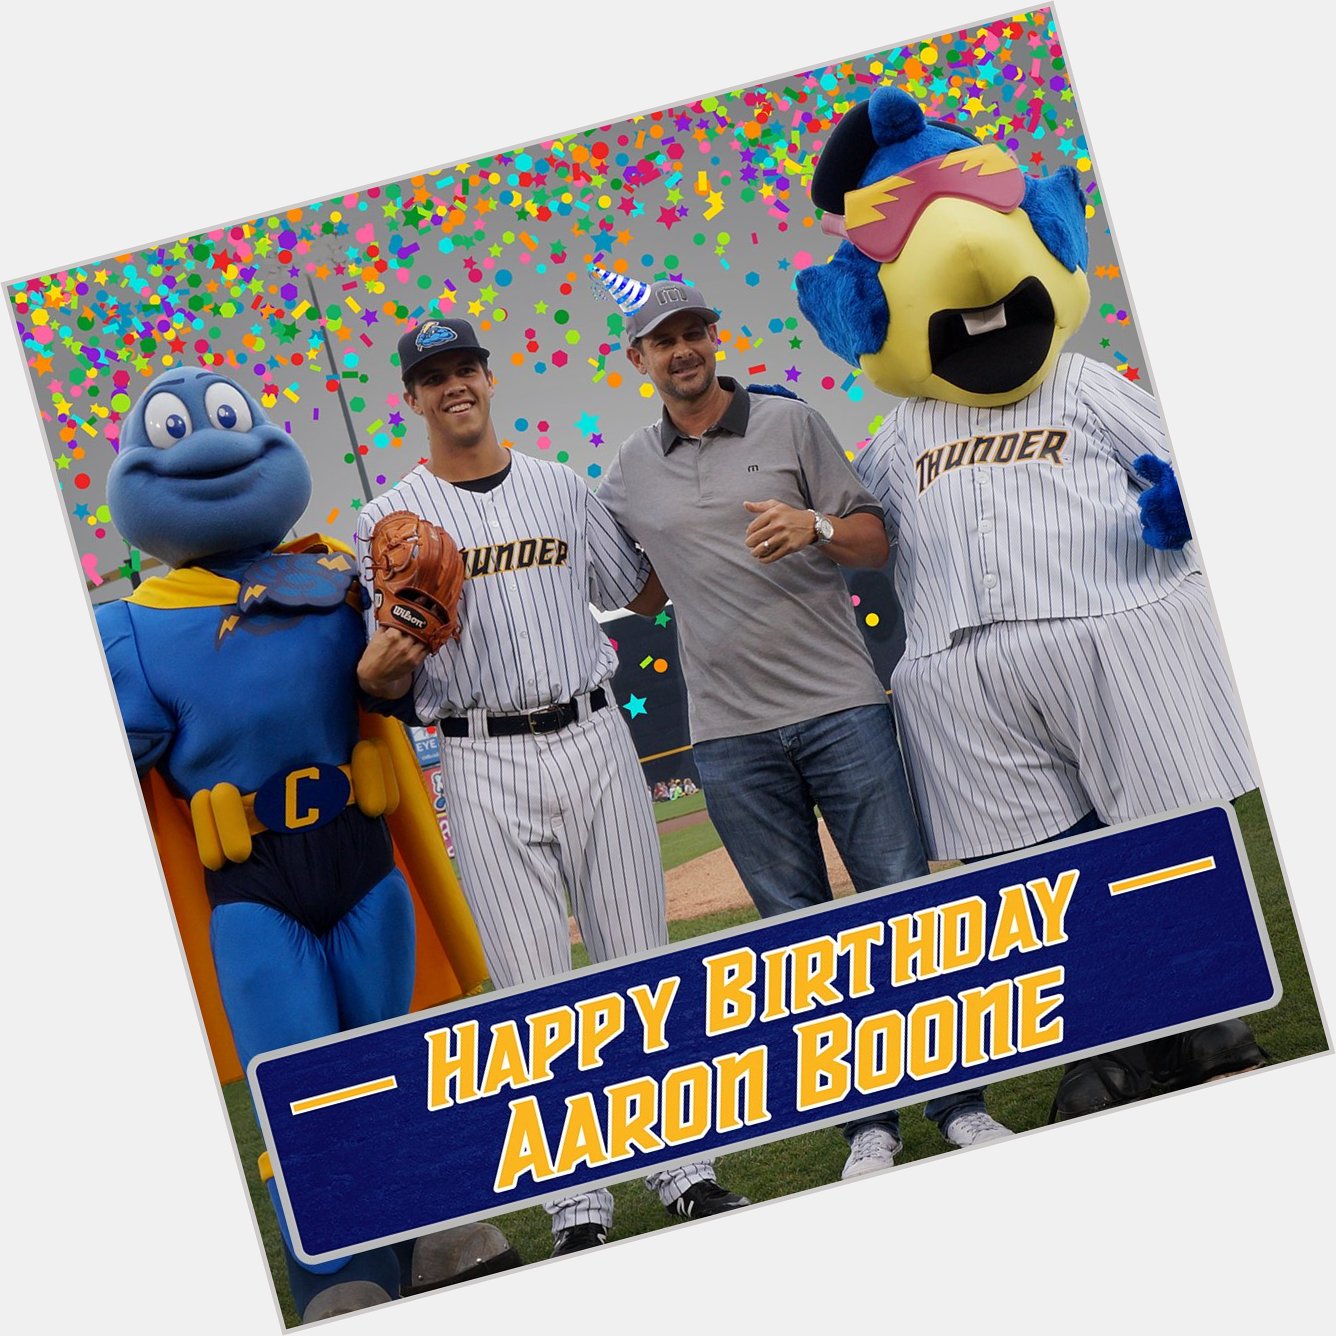 Happy birthday Aaron Boone! 